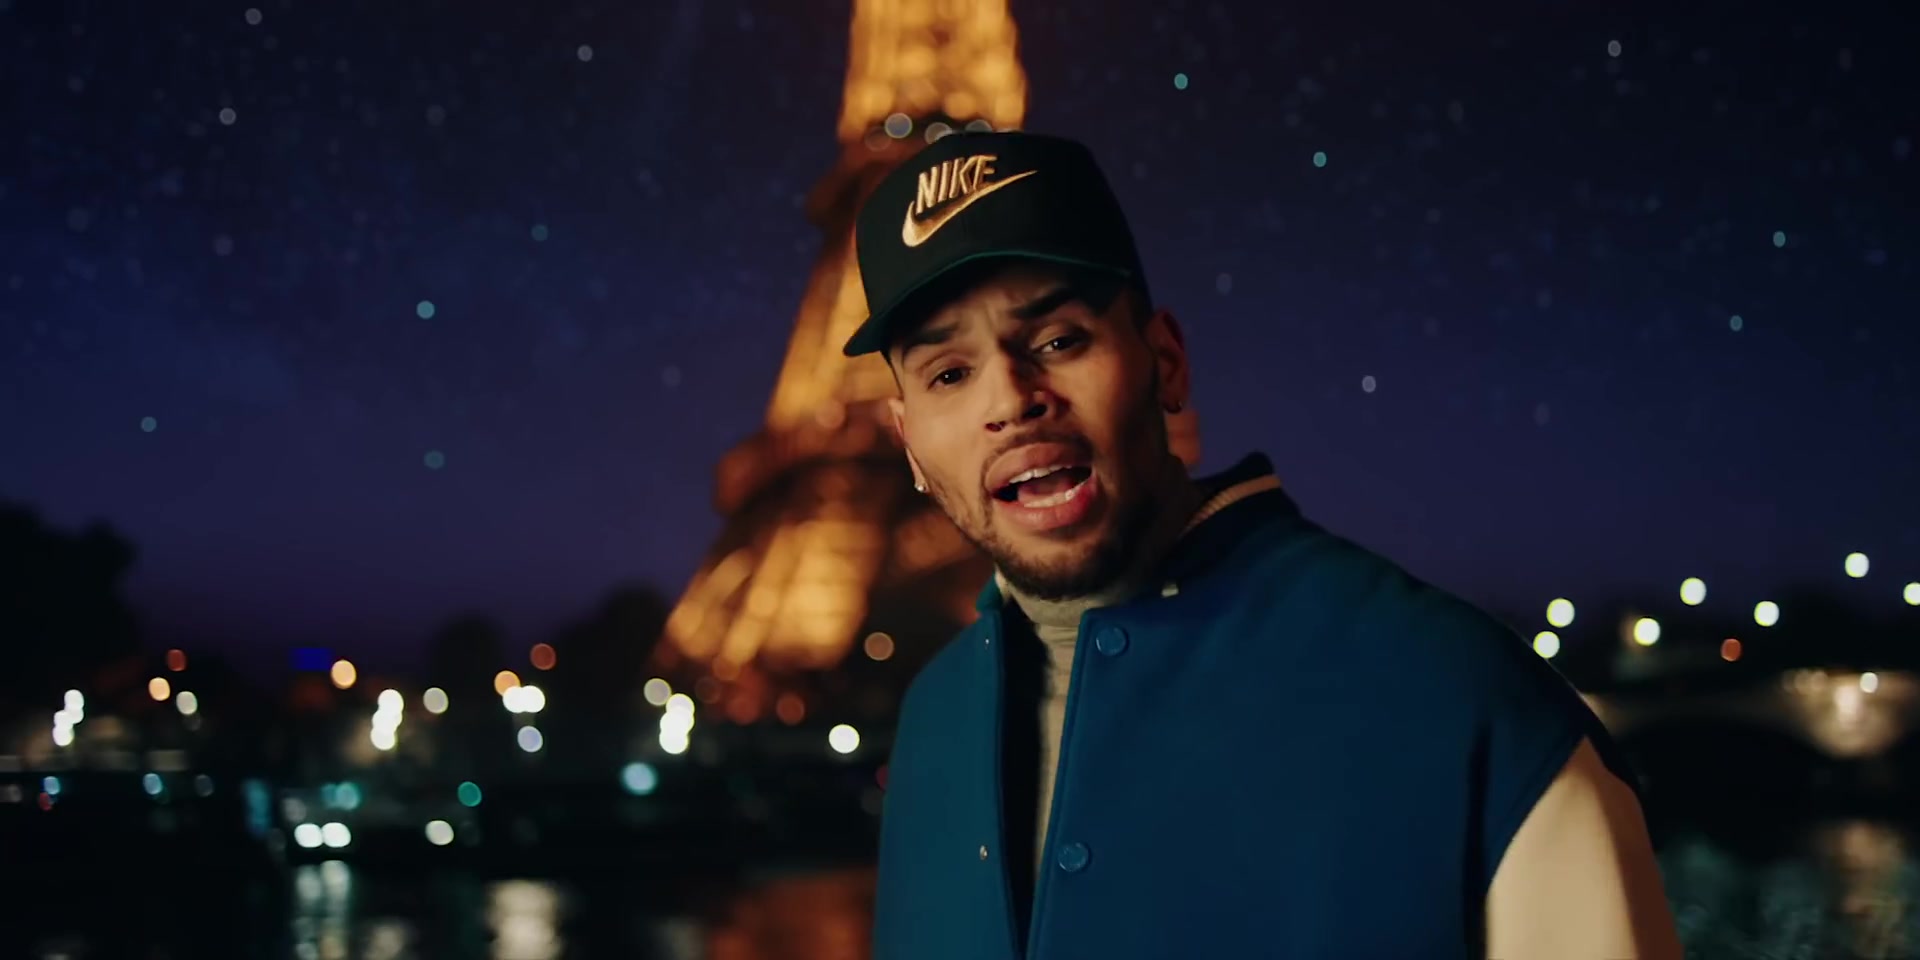 Chris brown love. Chris Brown in cap. Chris Brown в синей кепке. Love more Cris Brown. Chris Brown hats.